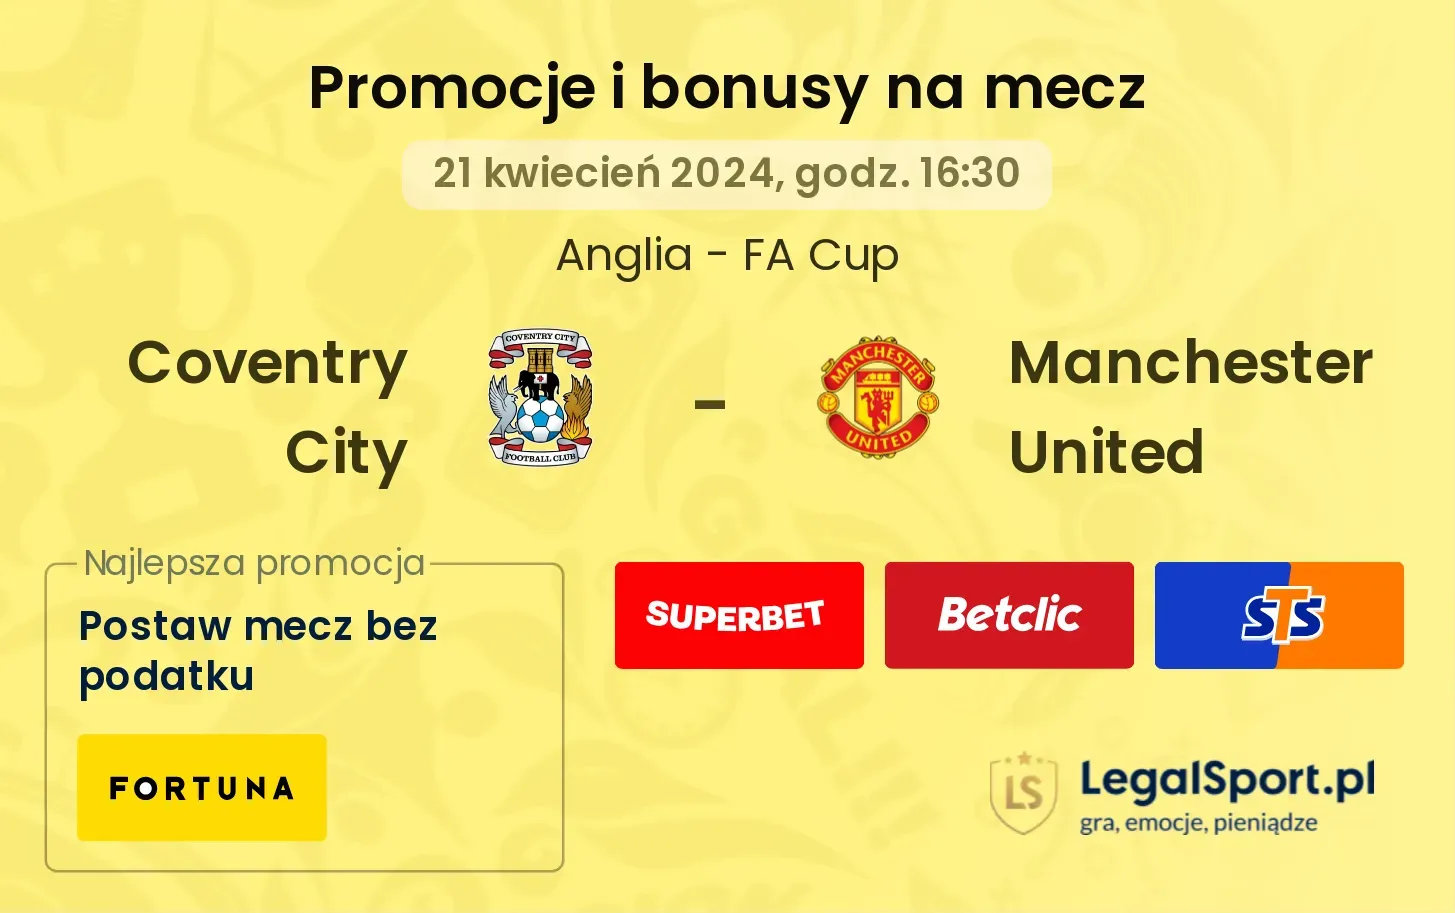 Coventry City - Manchester United promocje bonusy na mecz